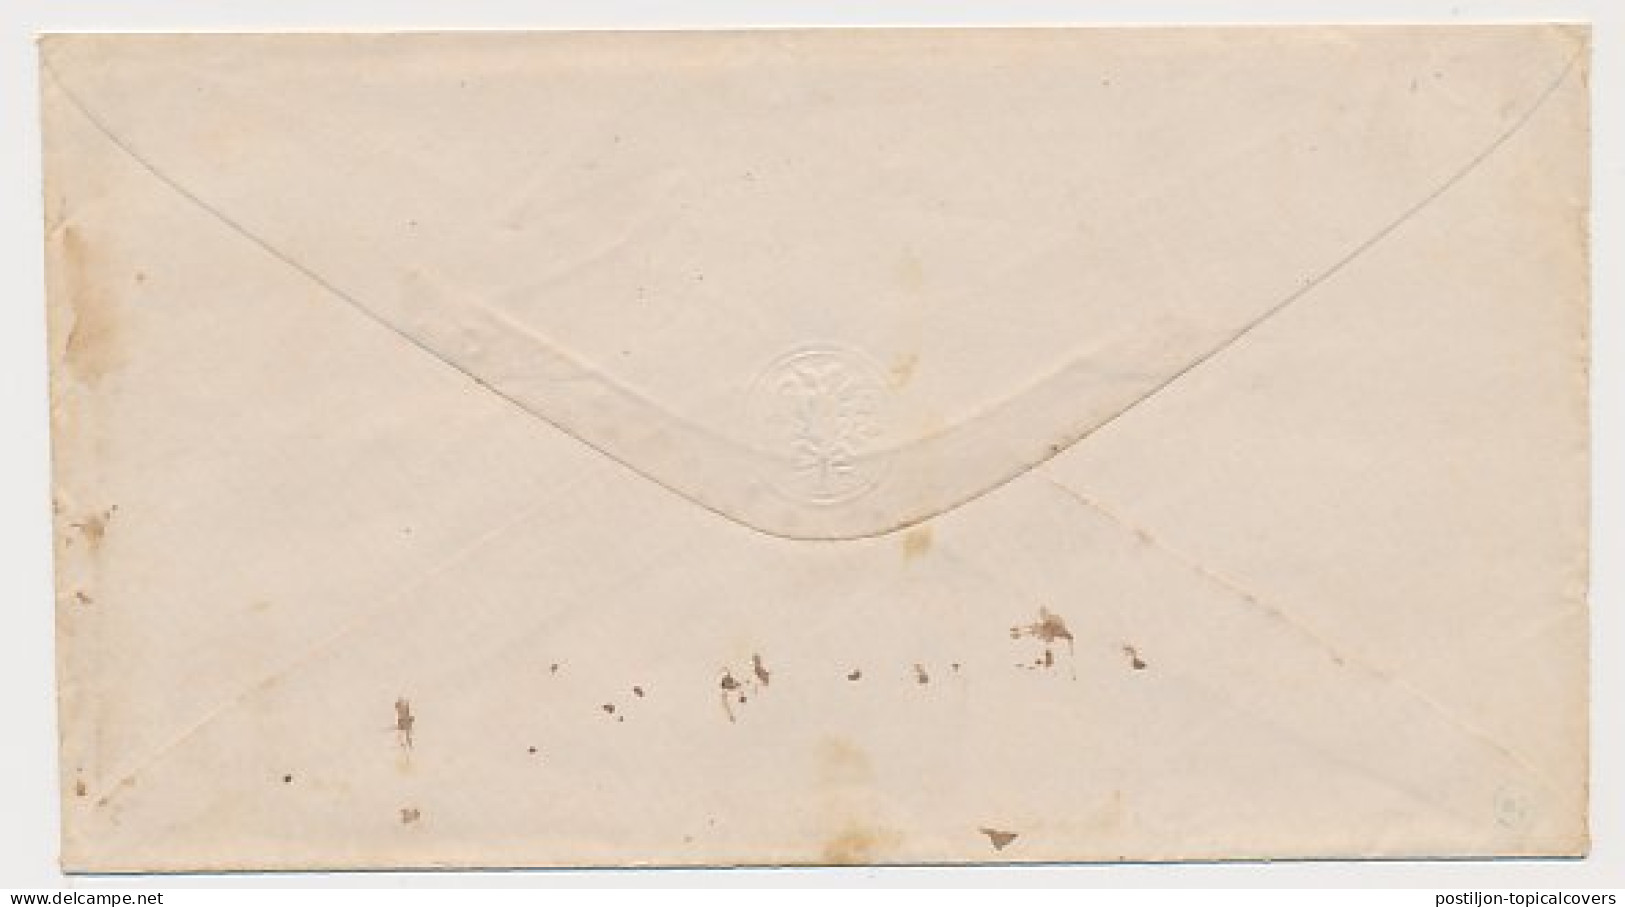 Enkhuizen - Andijk 1866 - Na Posttijd - ...-1852 Préphilatélie